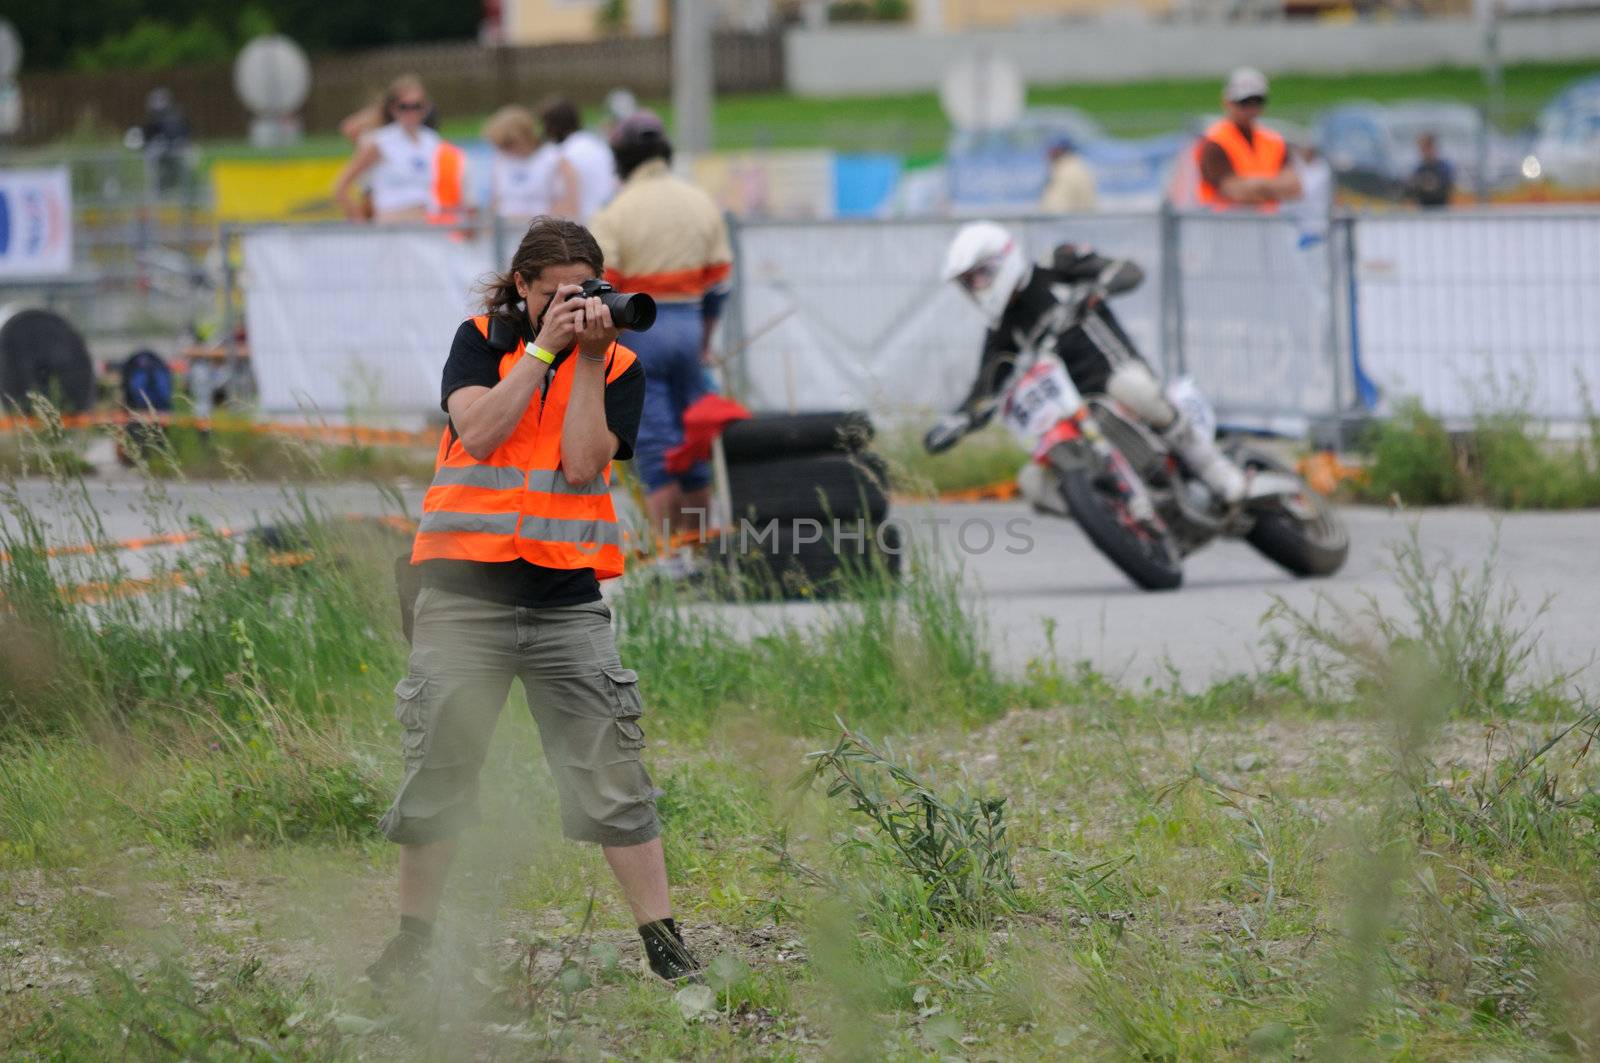 TAXENBACH, AUSTRIA - JUN 5: Supermoto trophy race. Photographer at the final race on June 5, 2011 in Taxenbach, Austria.